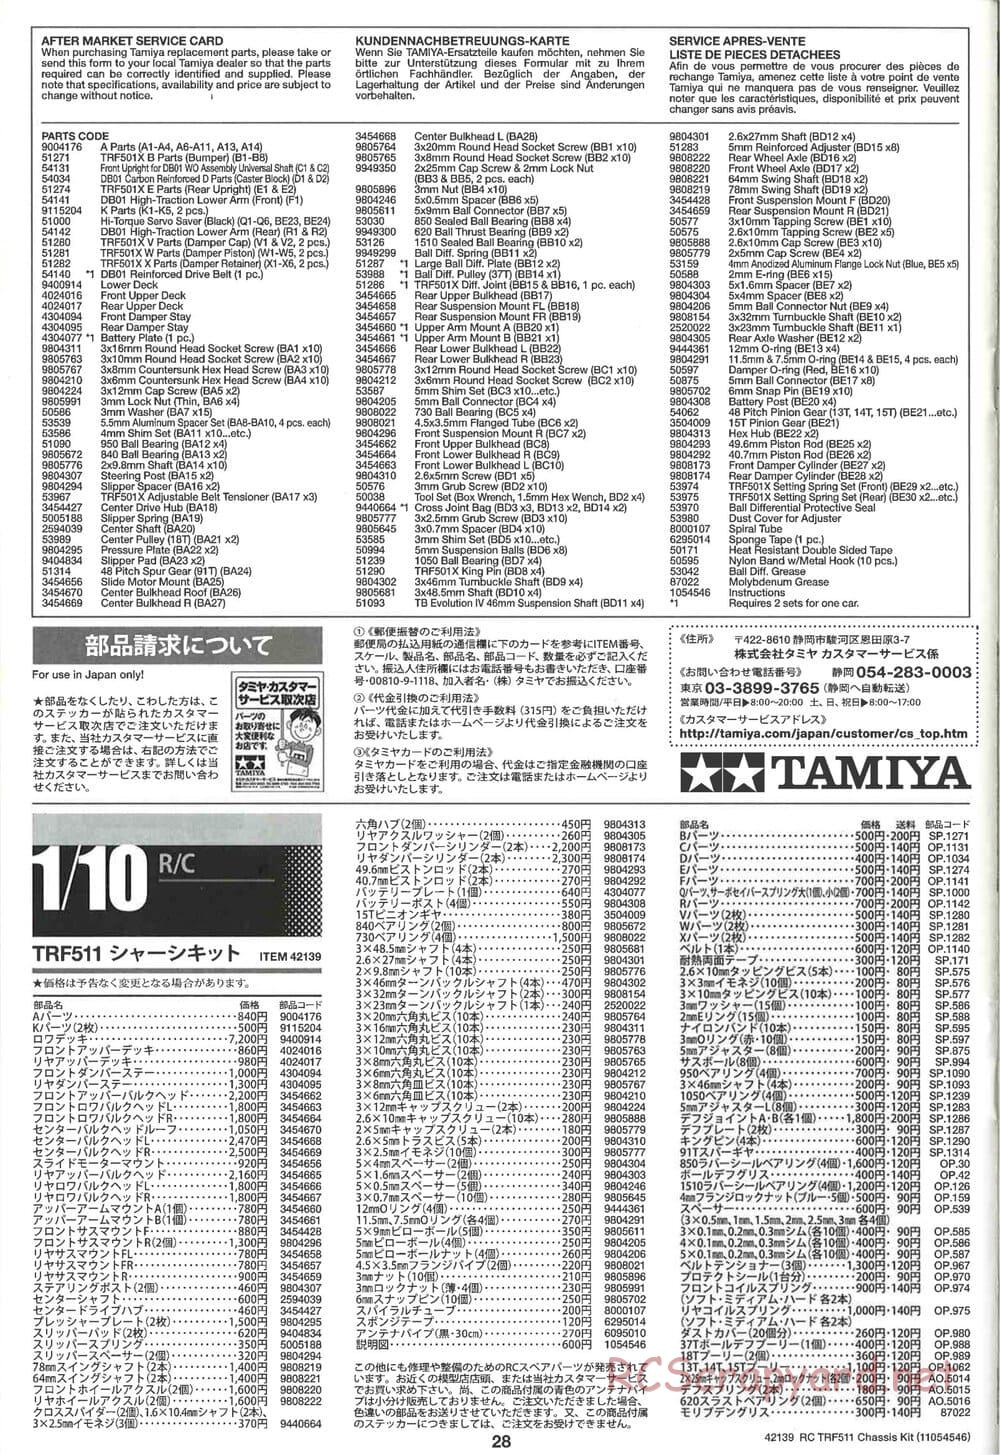 Tamiya - TRF511 Chassis - Manual - Page 28